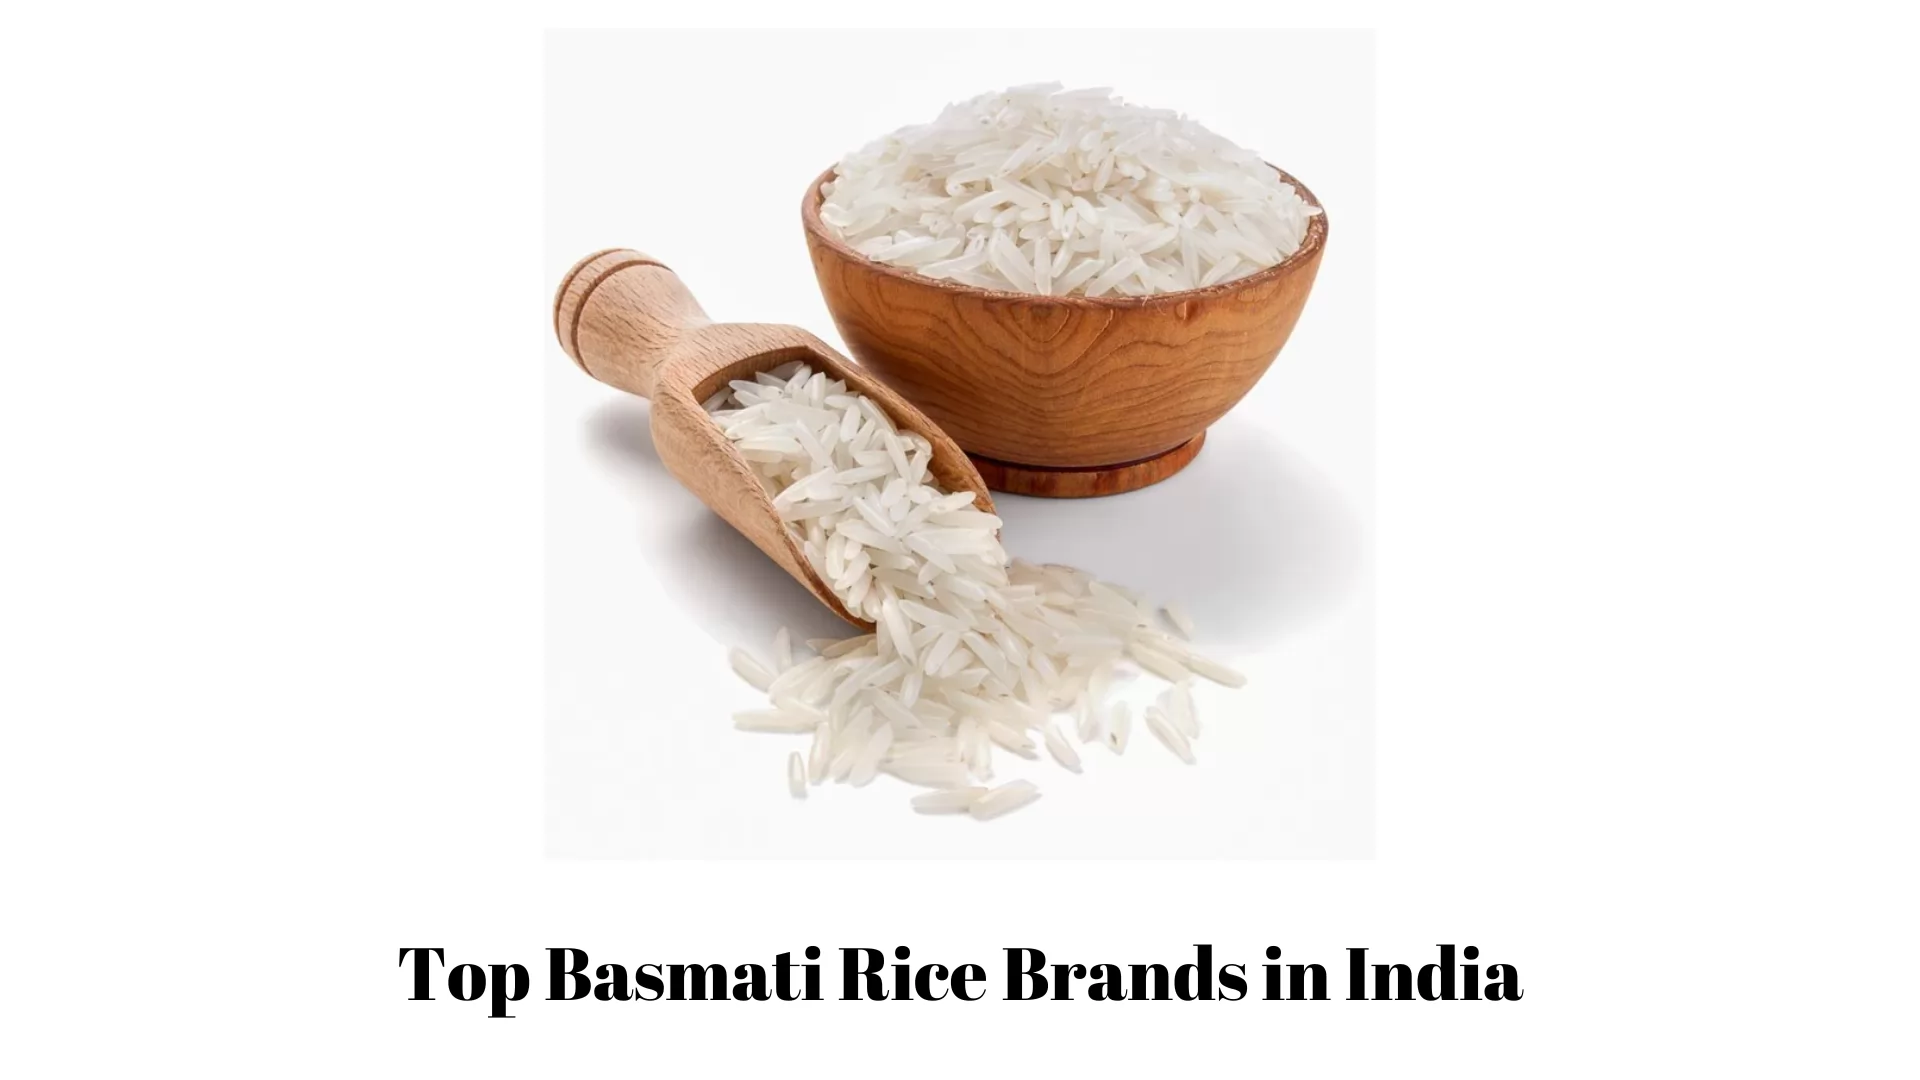 Top Basmati Rice Brands in India